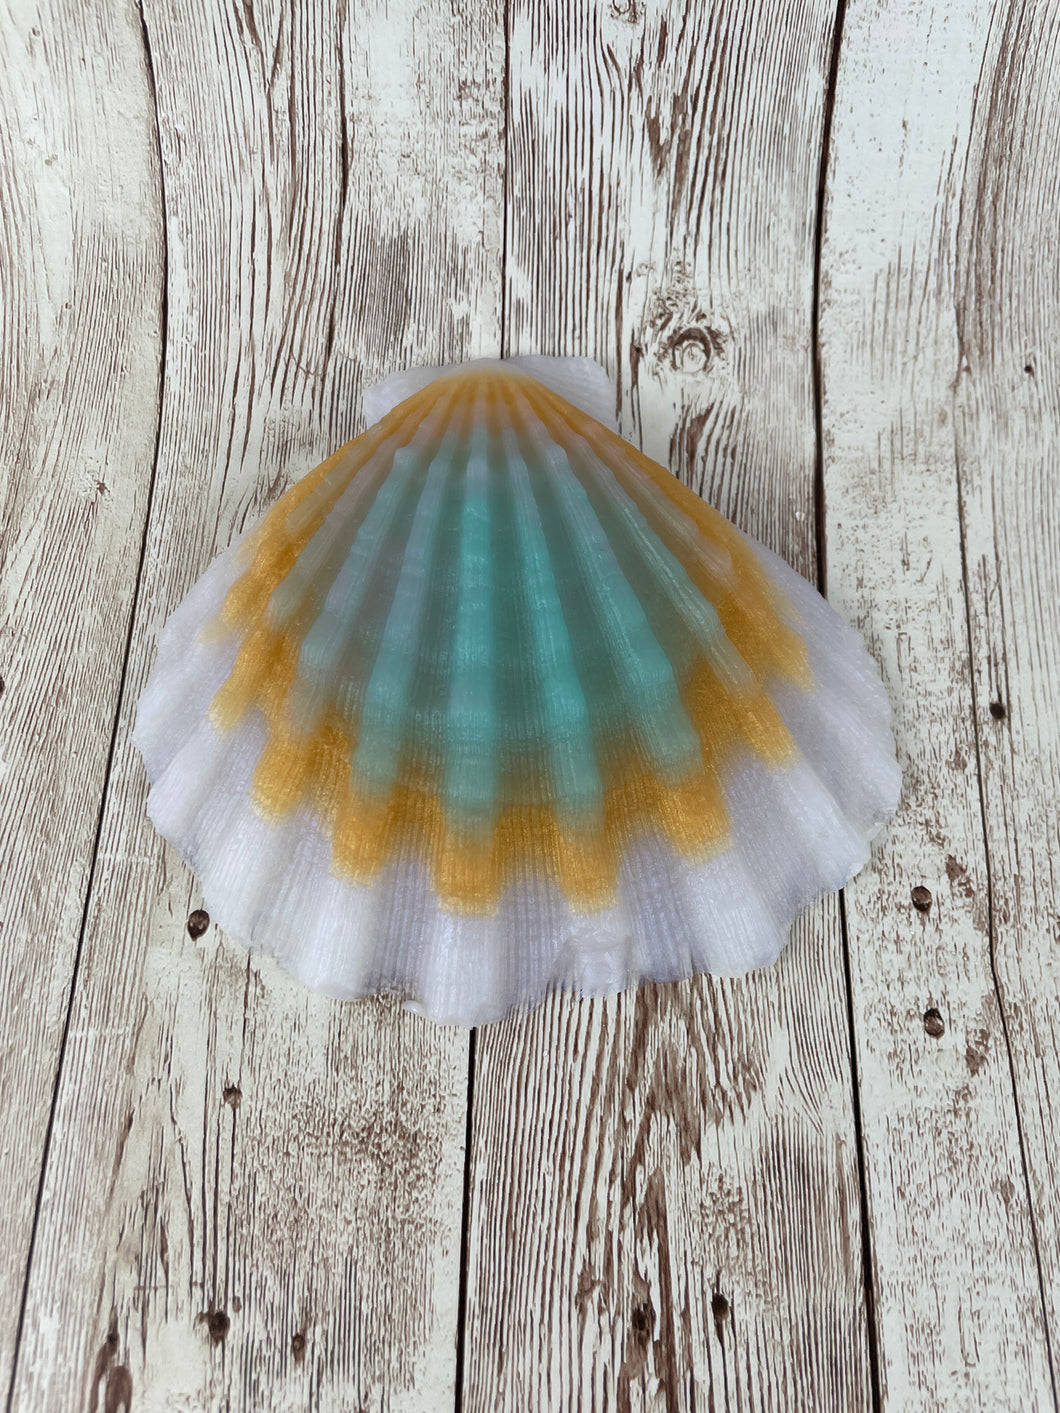 Mermaid's Shell Squishy, Size Onesize (Soft Firmness) Royal Unicorn